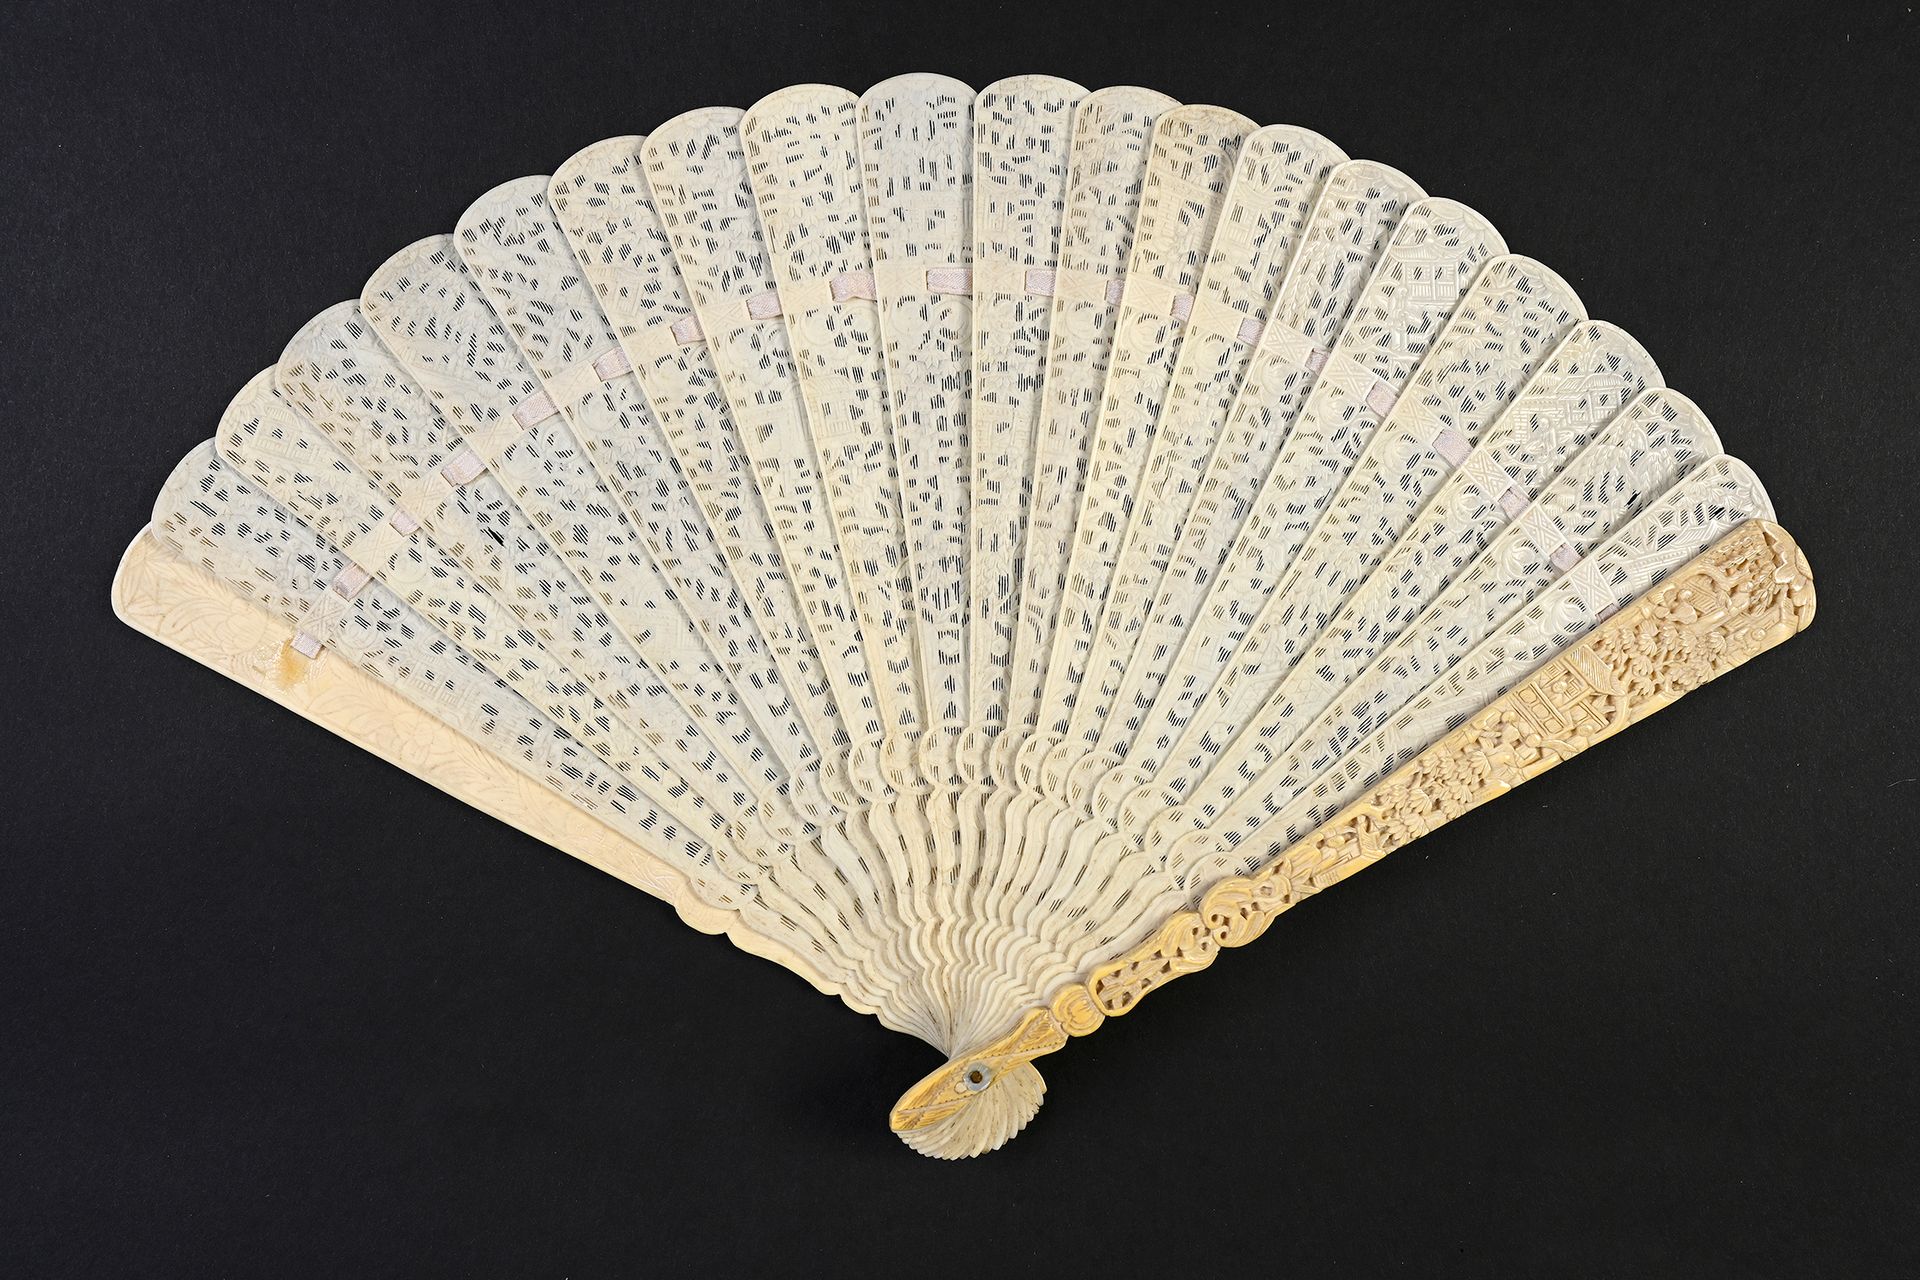 Null Bamboo, China, 19th century
Broken type fan made of pierced bone and engrav&hellip;